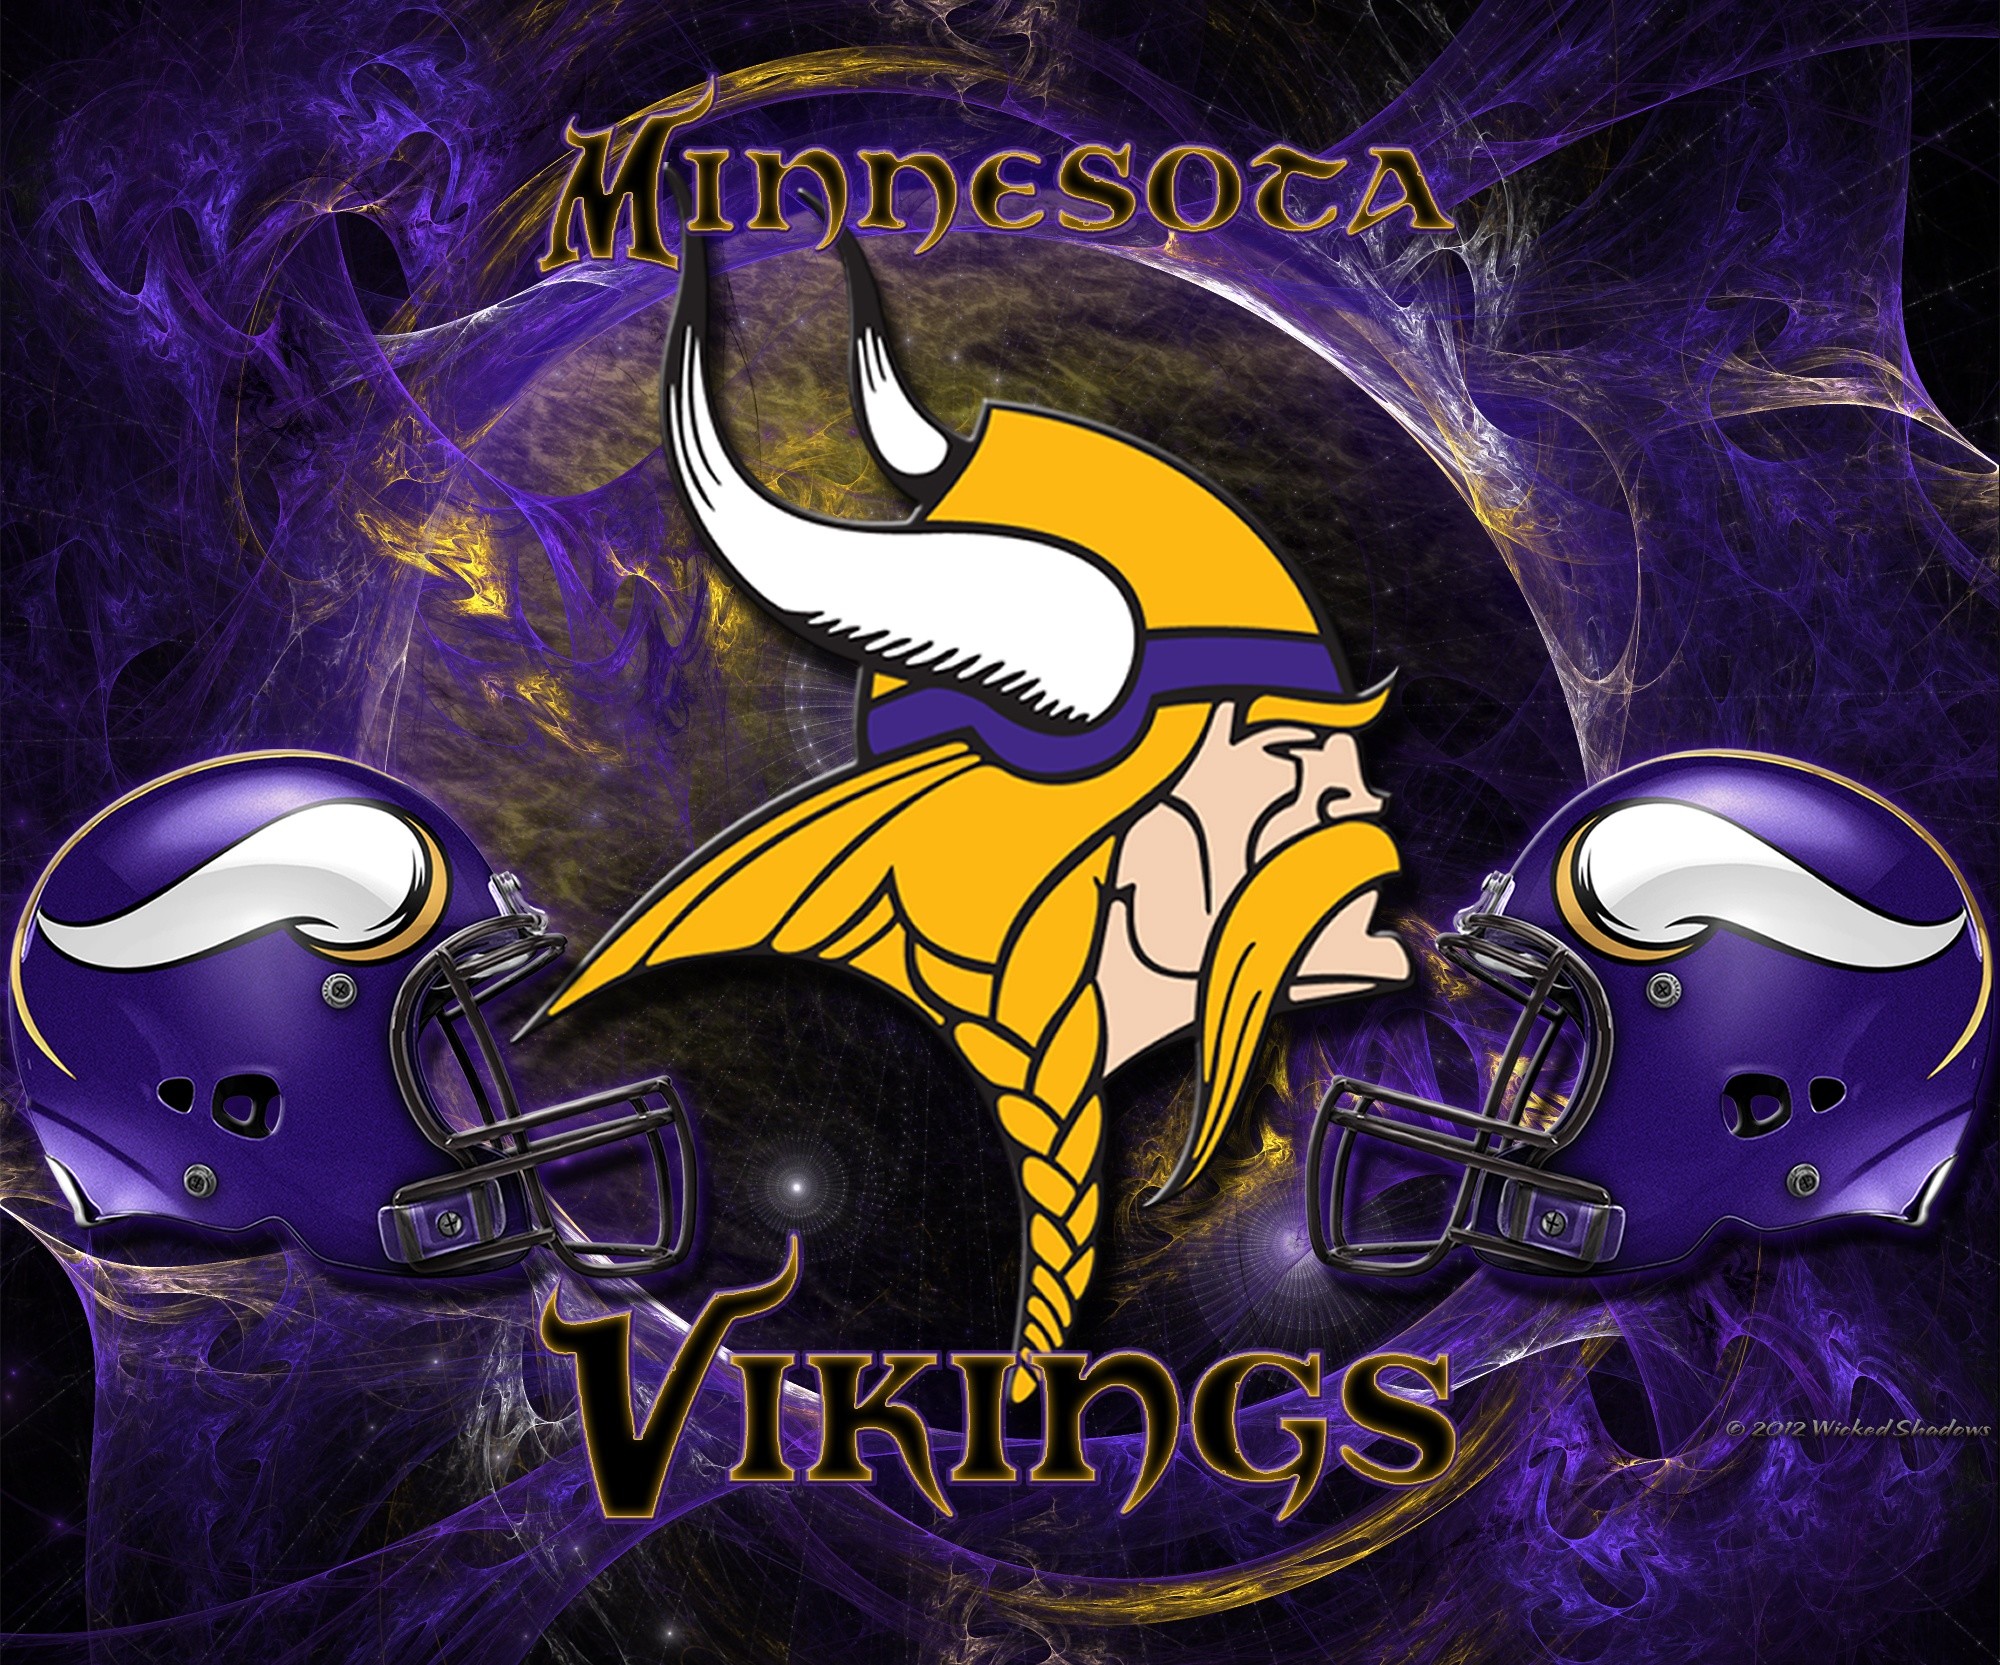 2000x1665 Minnesota Vikings Wicked Wallpaper